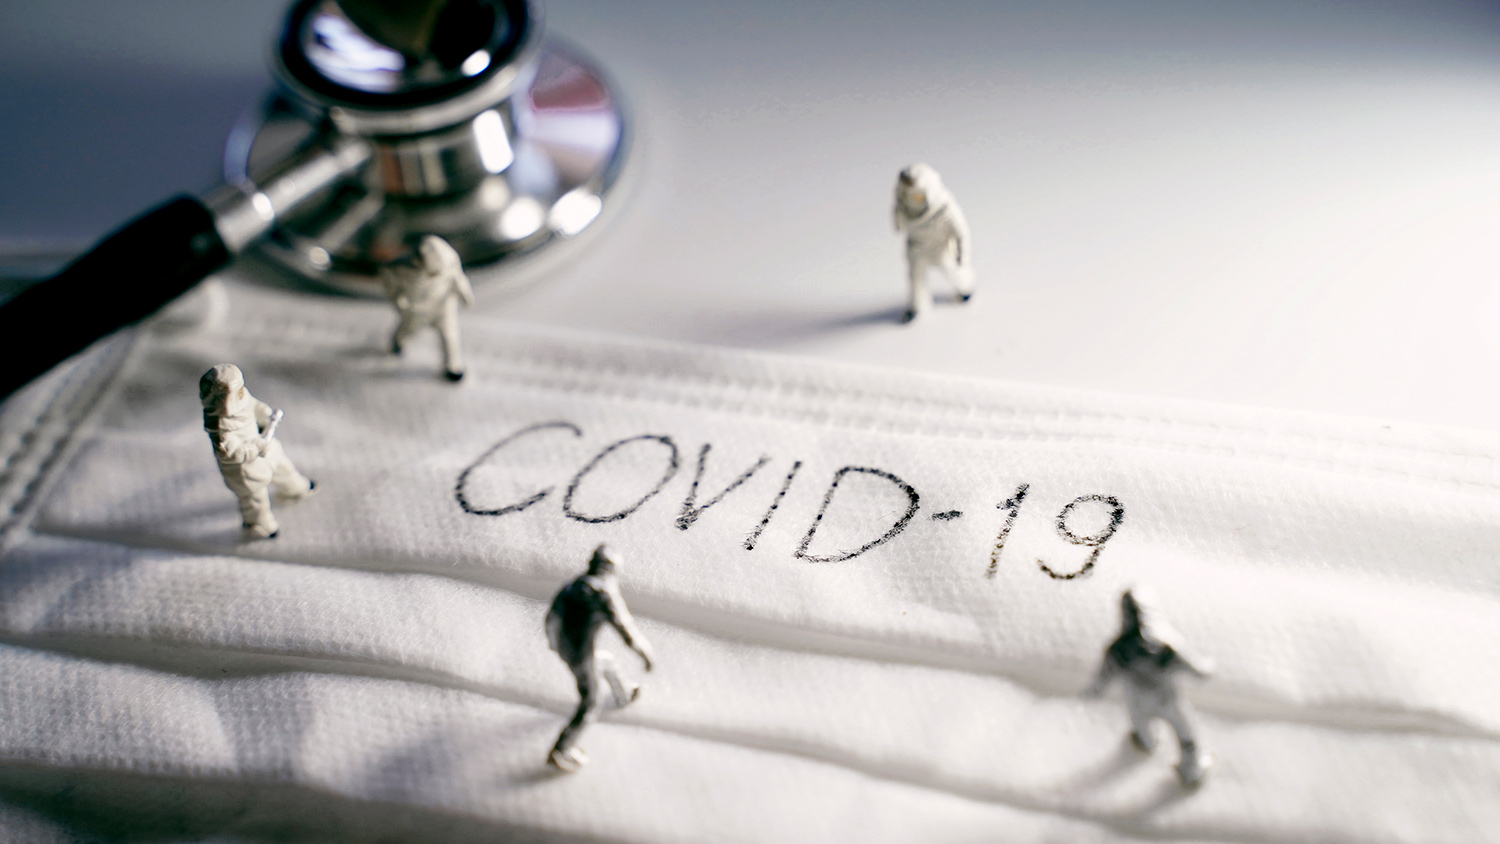 Люди заболевают COVID-19 повторно крайне редко